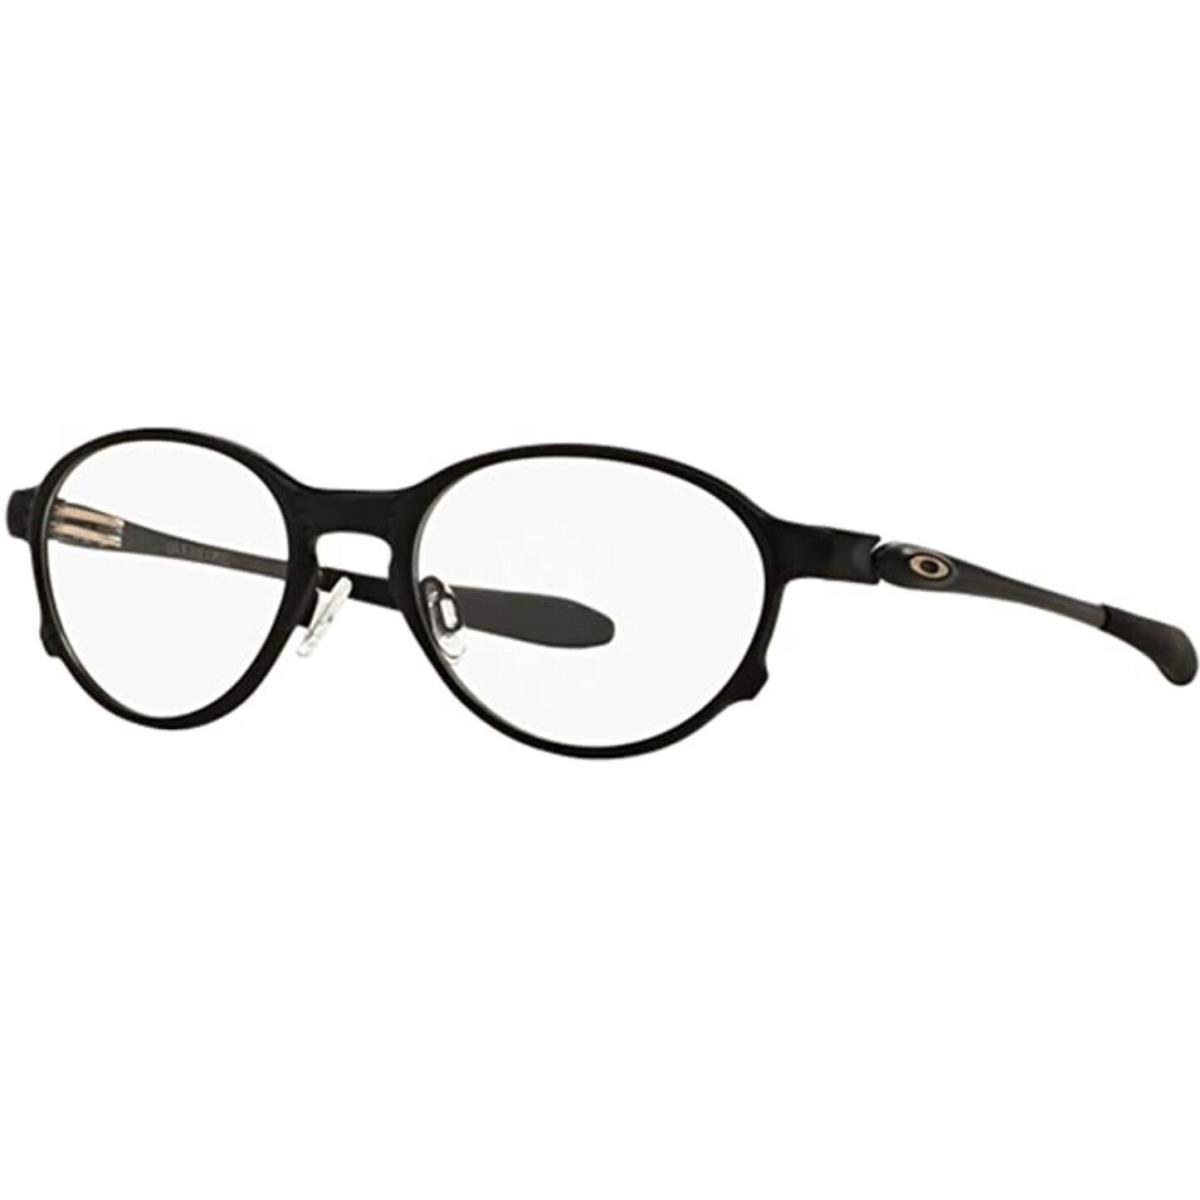 Oakley Overlord OX5067-0251 51mm Satin Black Titanium Eyeglasses Frames